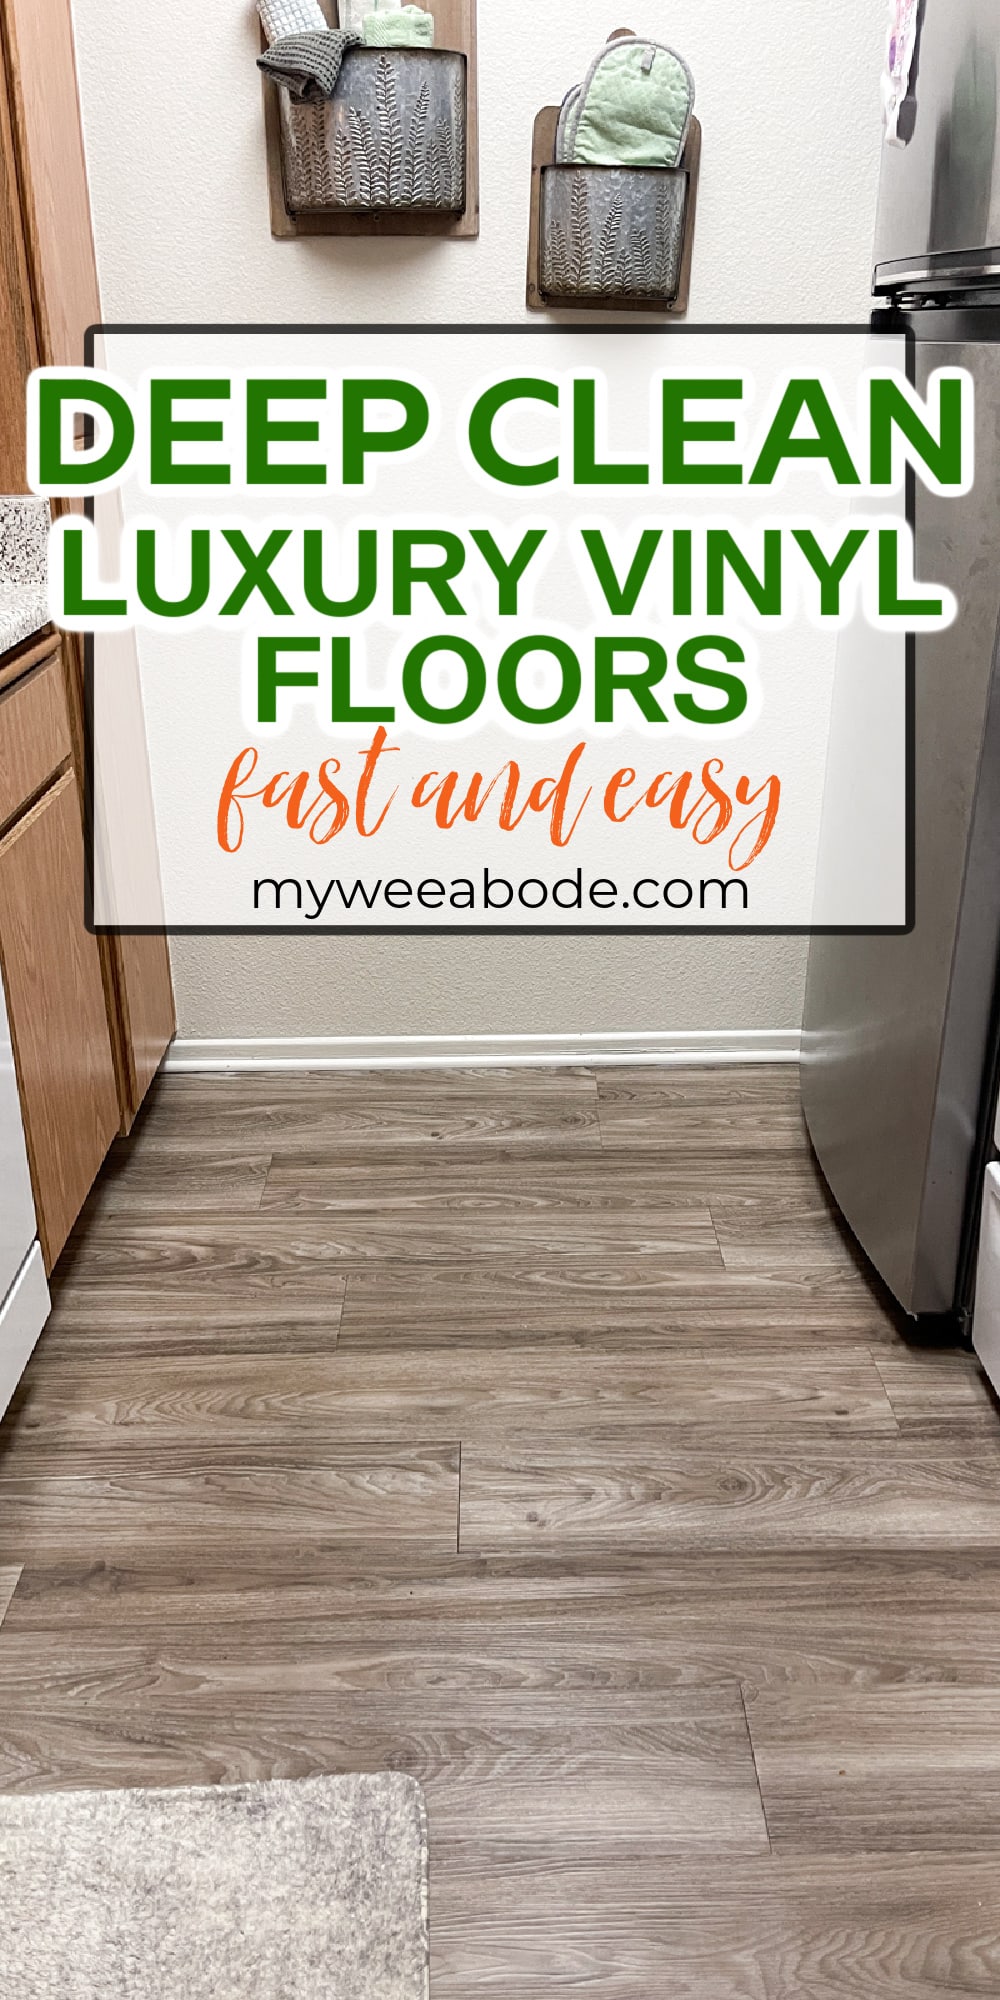 galley kitchen with luxury vinyl plank floors